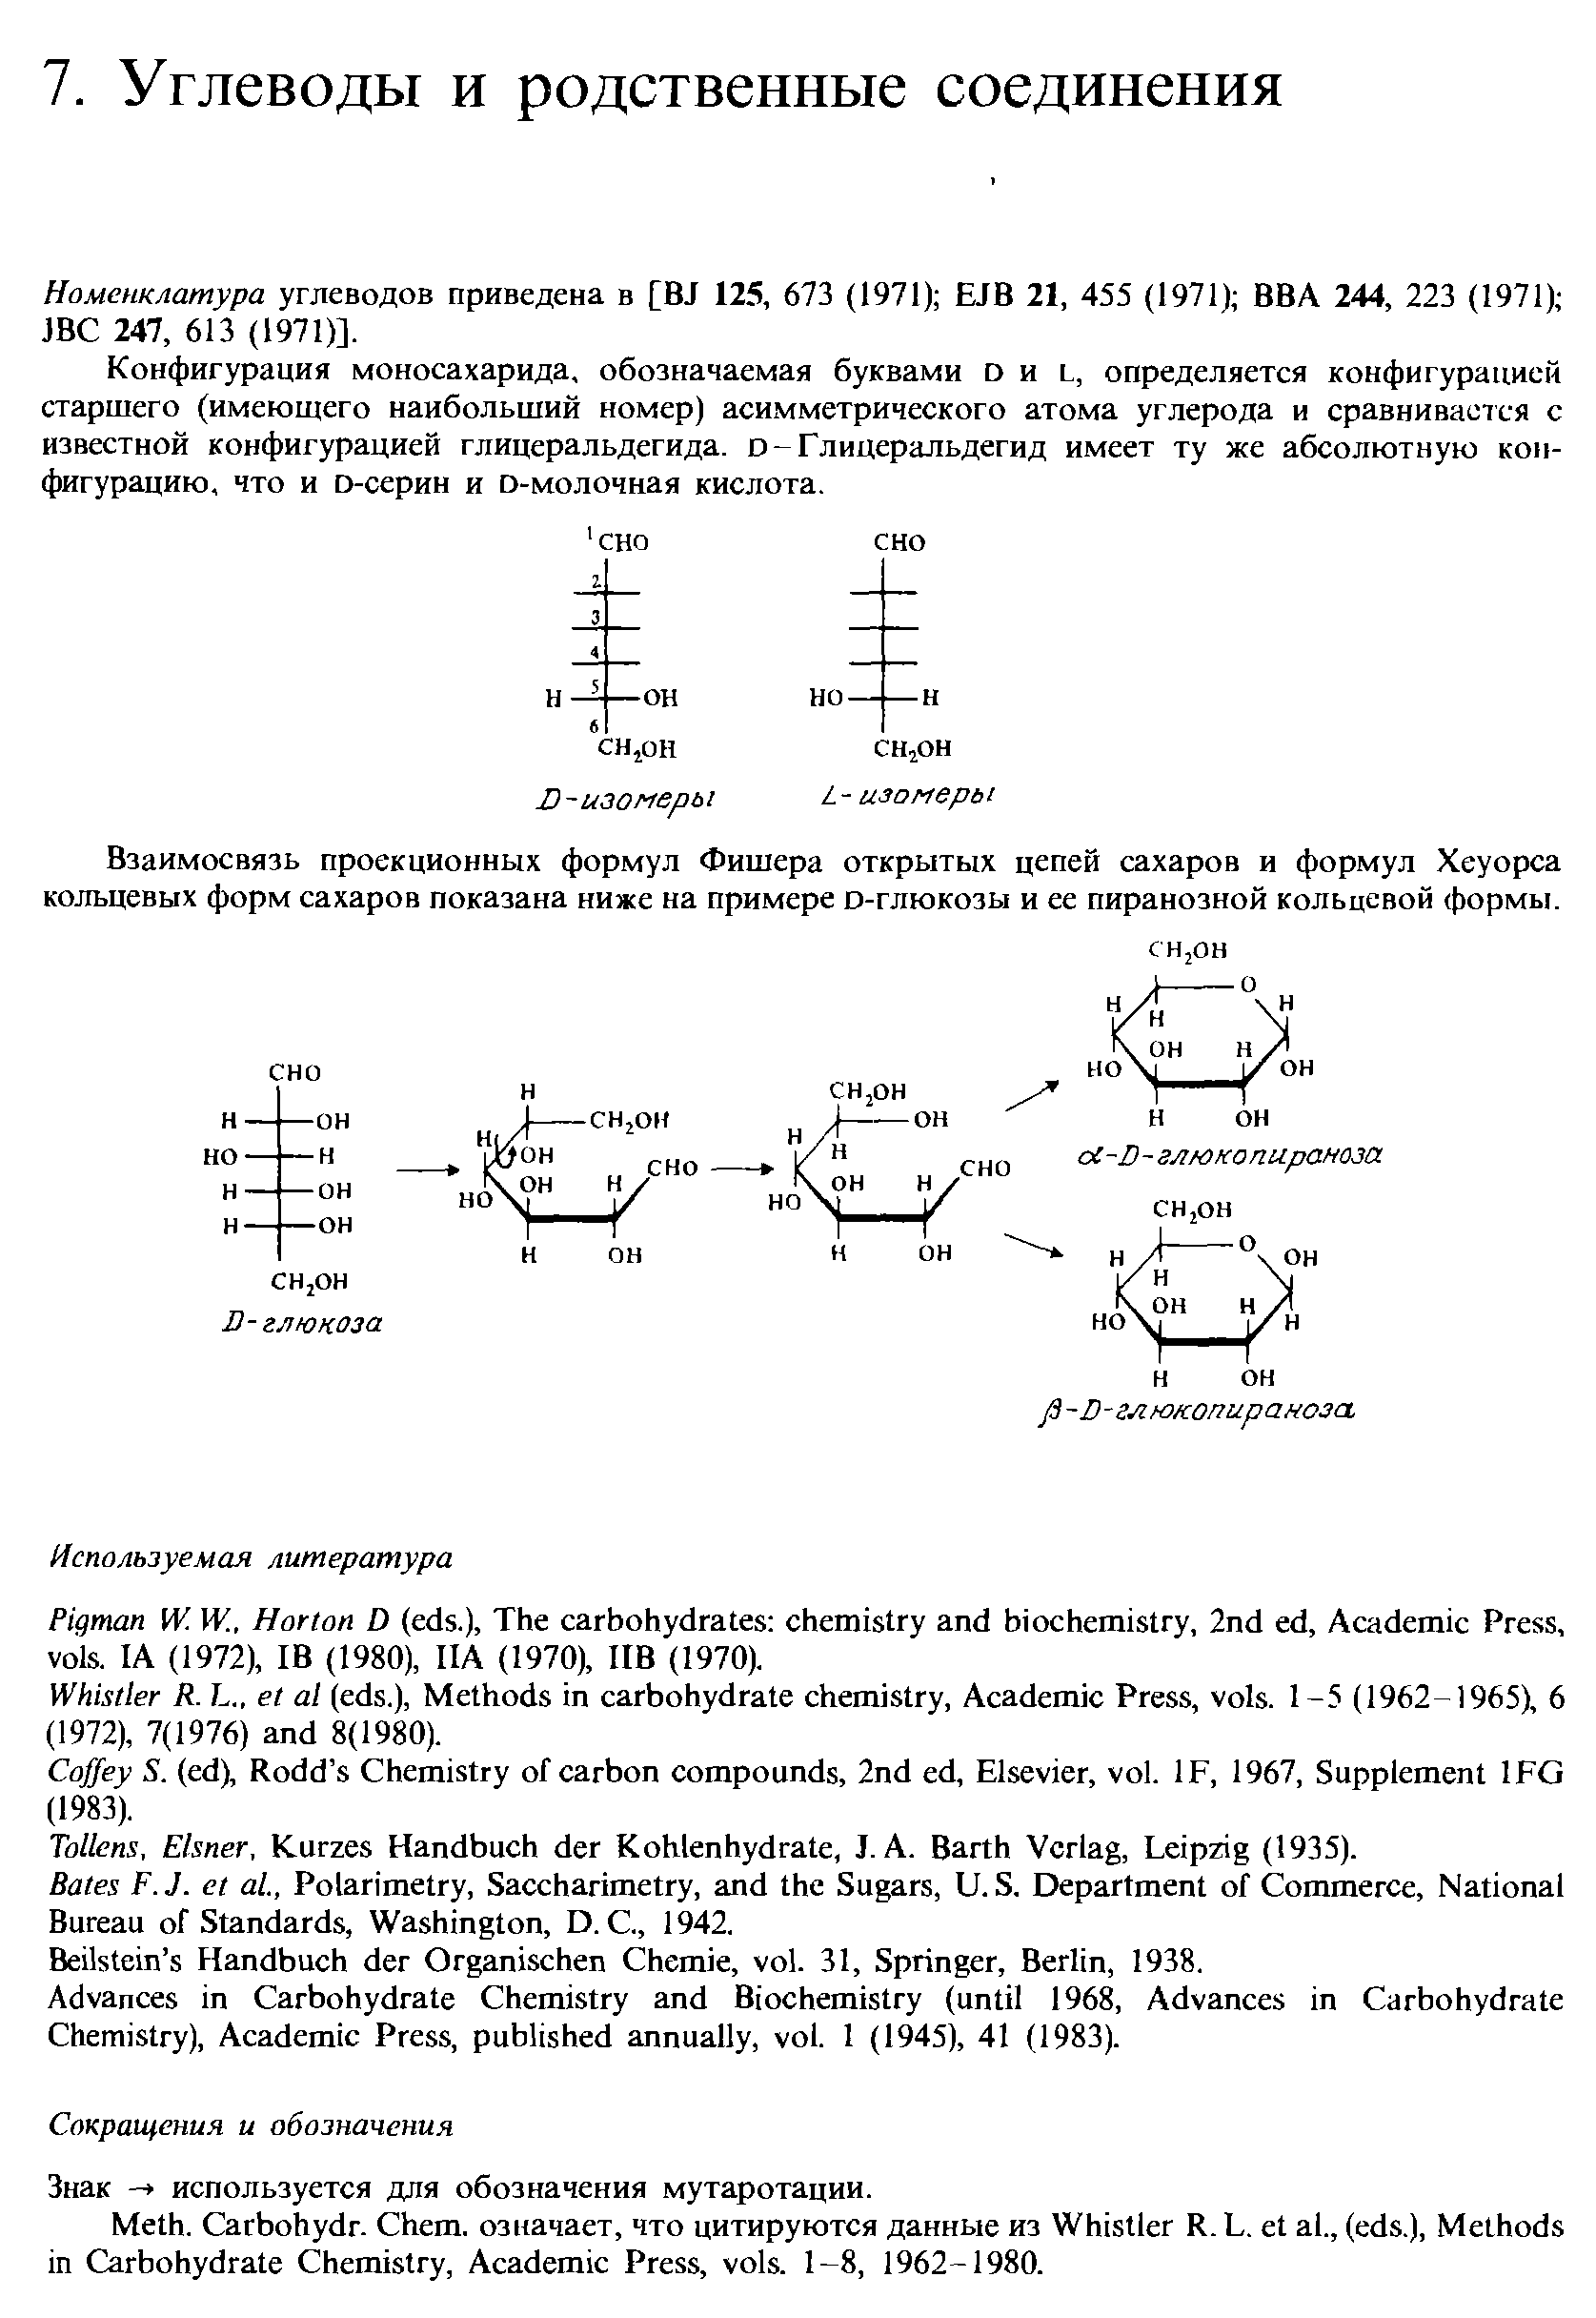 Номенклатура углеводов приведена в [BJ 125, 673 (1971) EJB 21, 455 (1971) ВВА 244, 223 (1971) JB 247, 613 (1971)].